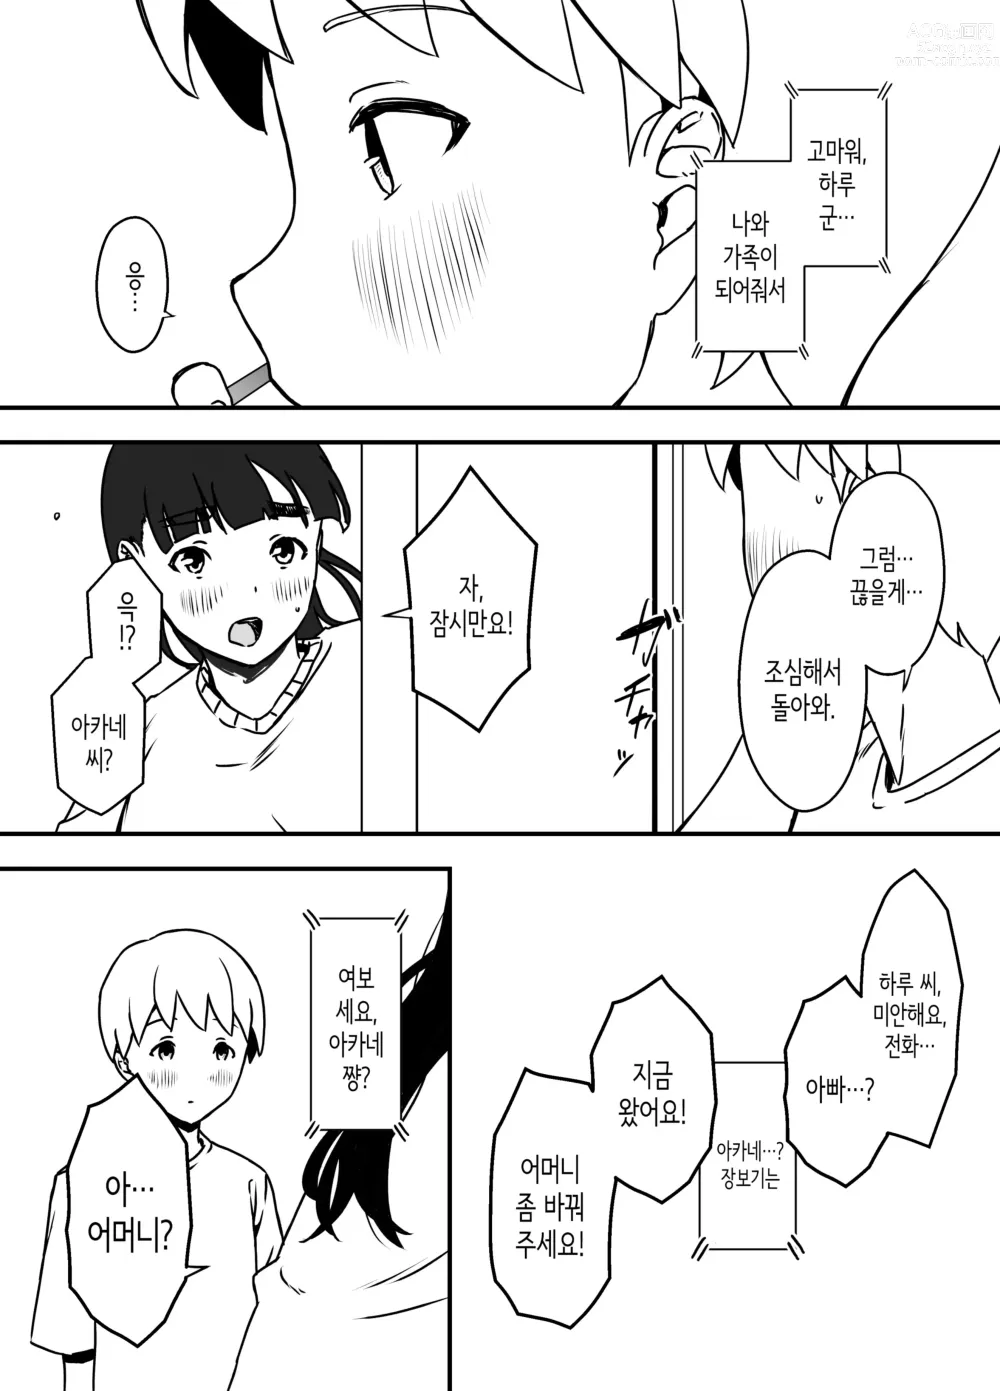 Page 29 of doujinshi 의붓 누나와의 7일간 생활 5